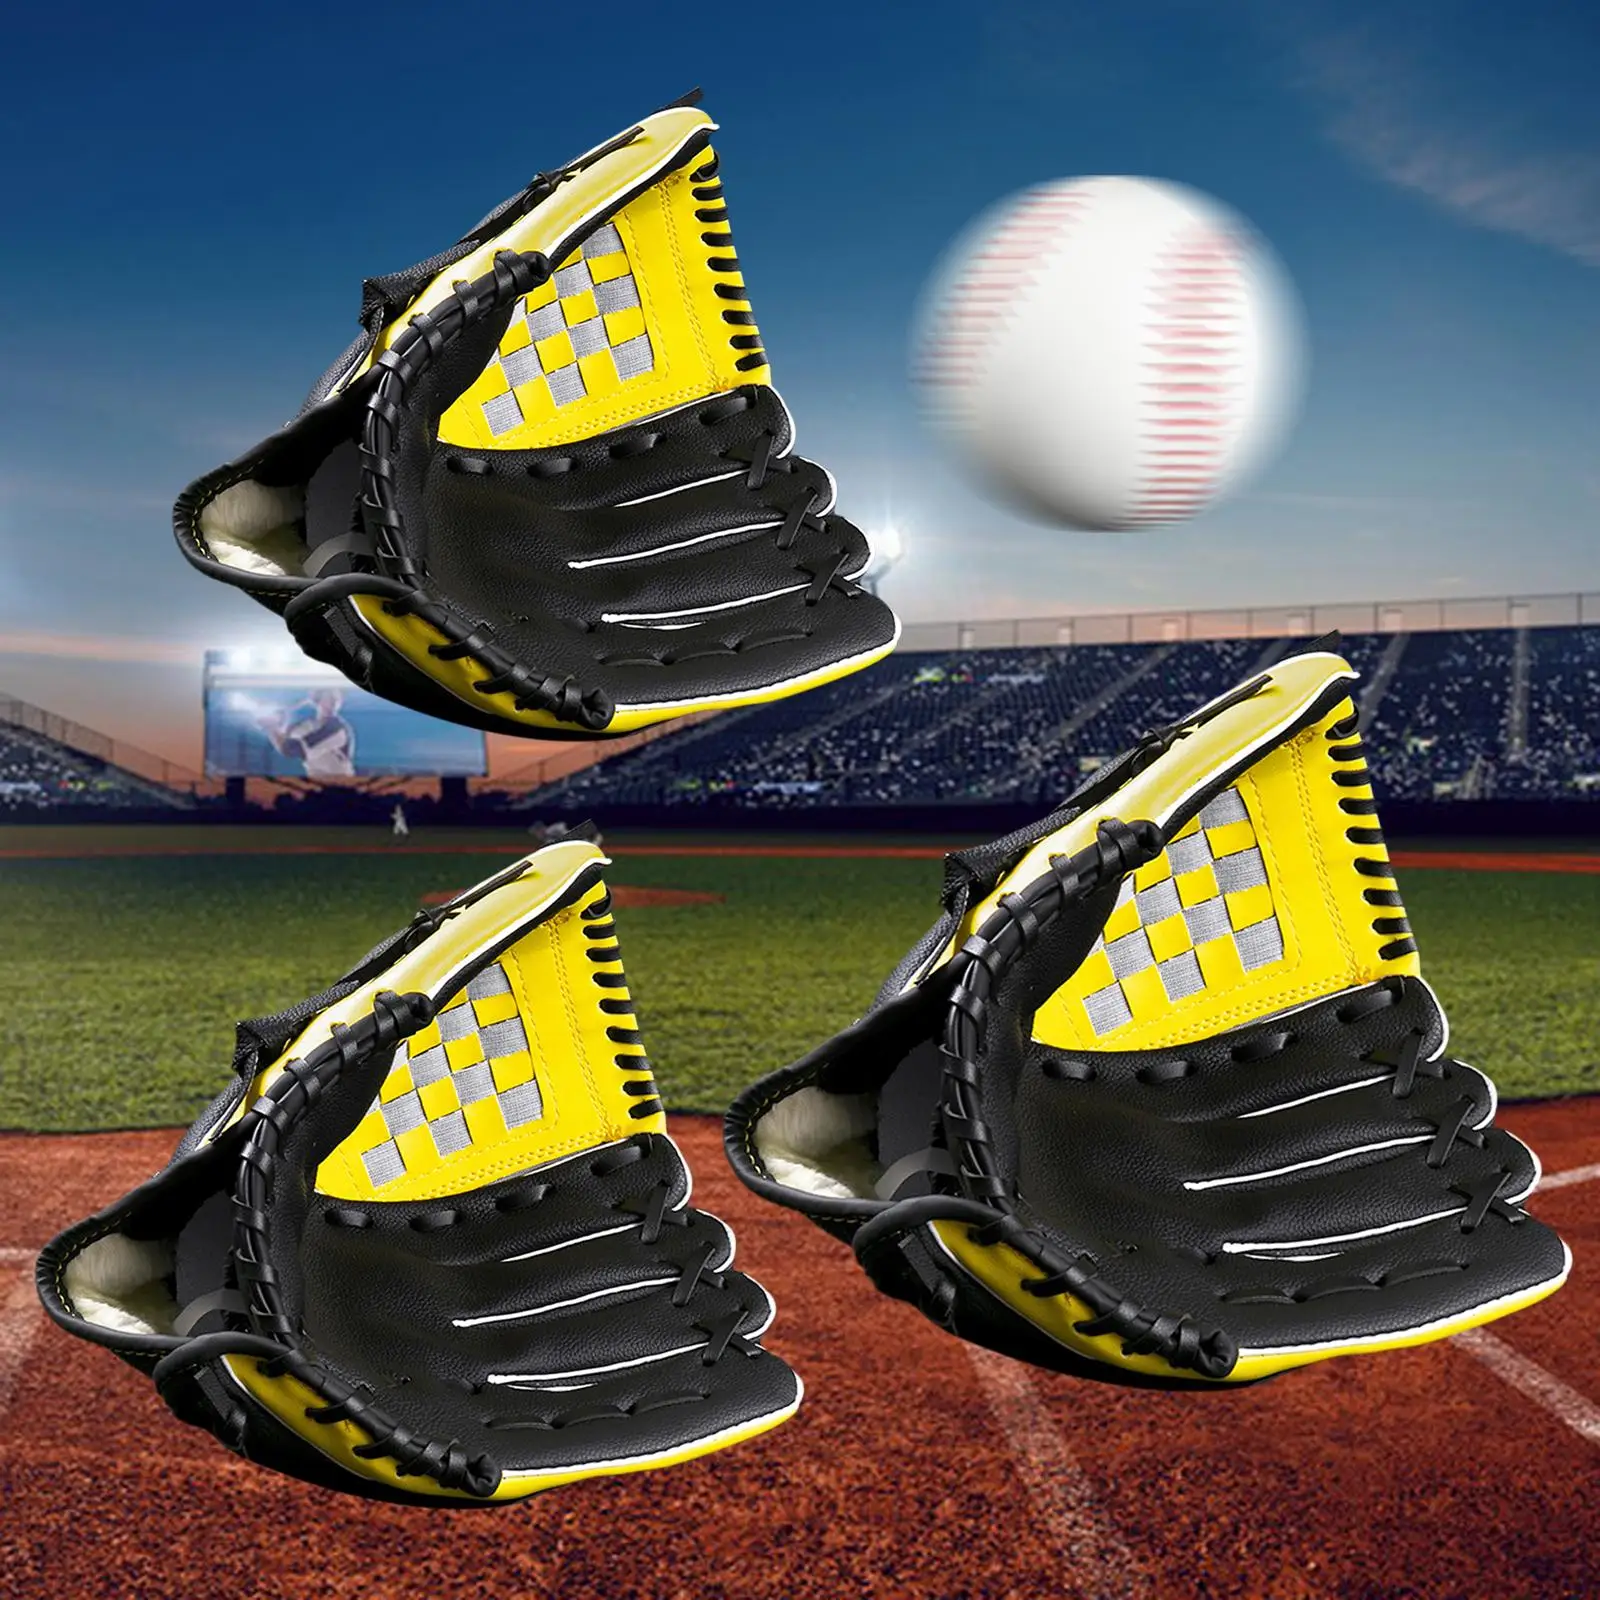 Professional Baseball Glove Portable Softball Glove Durable PU Left Hand Throw for Exercise Training Practice Equipment